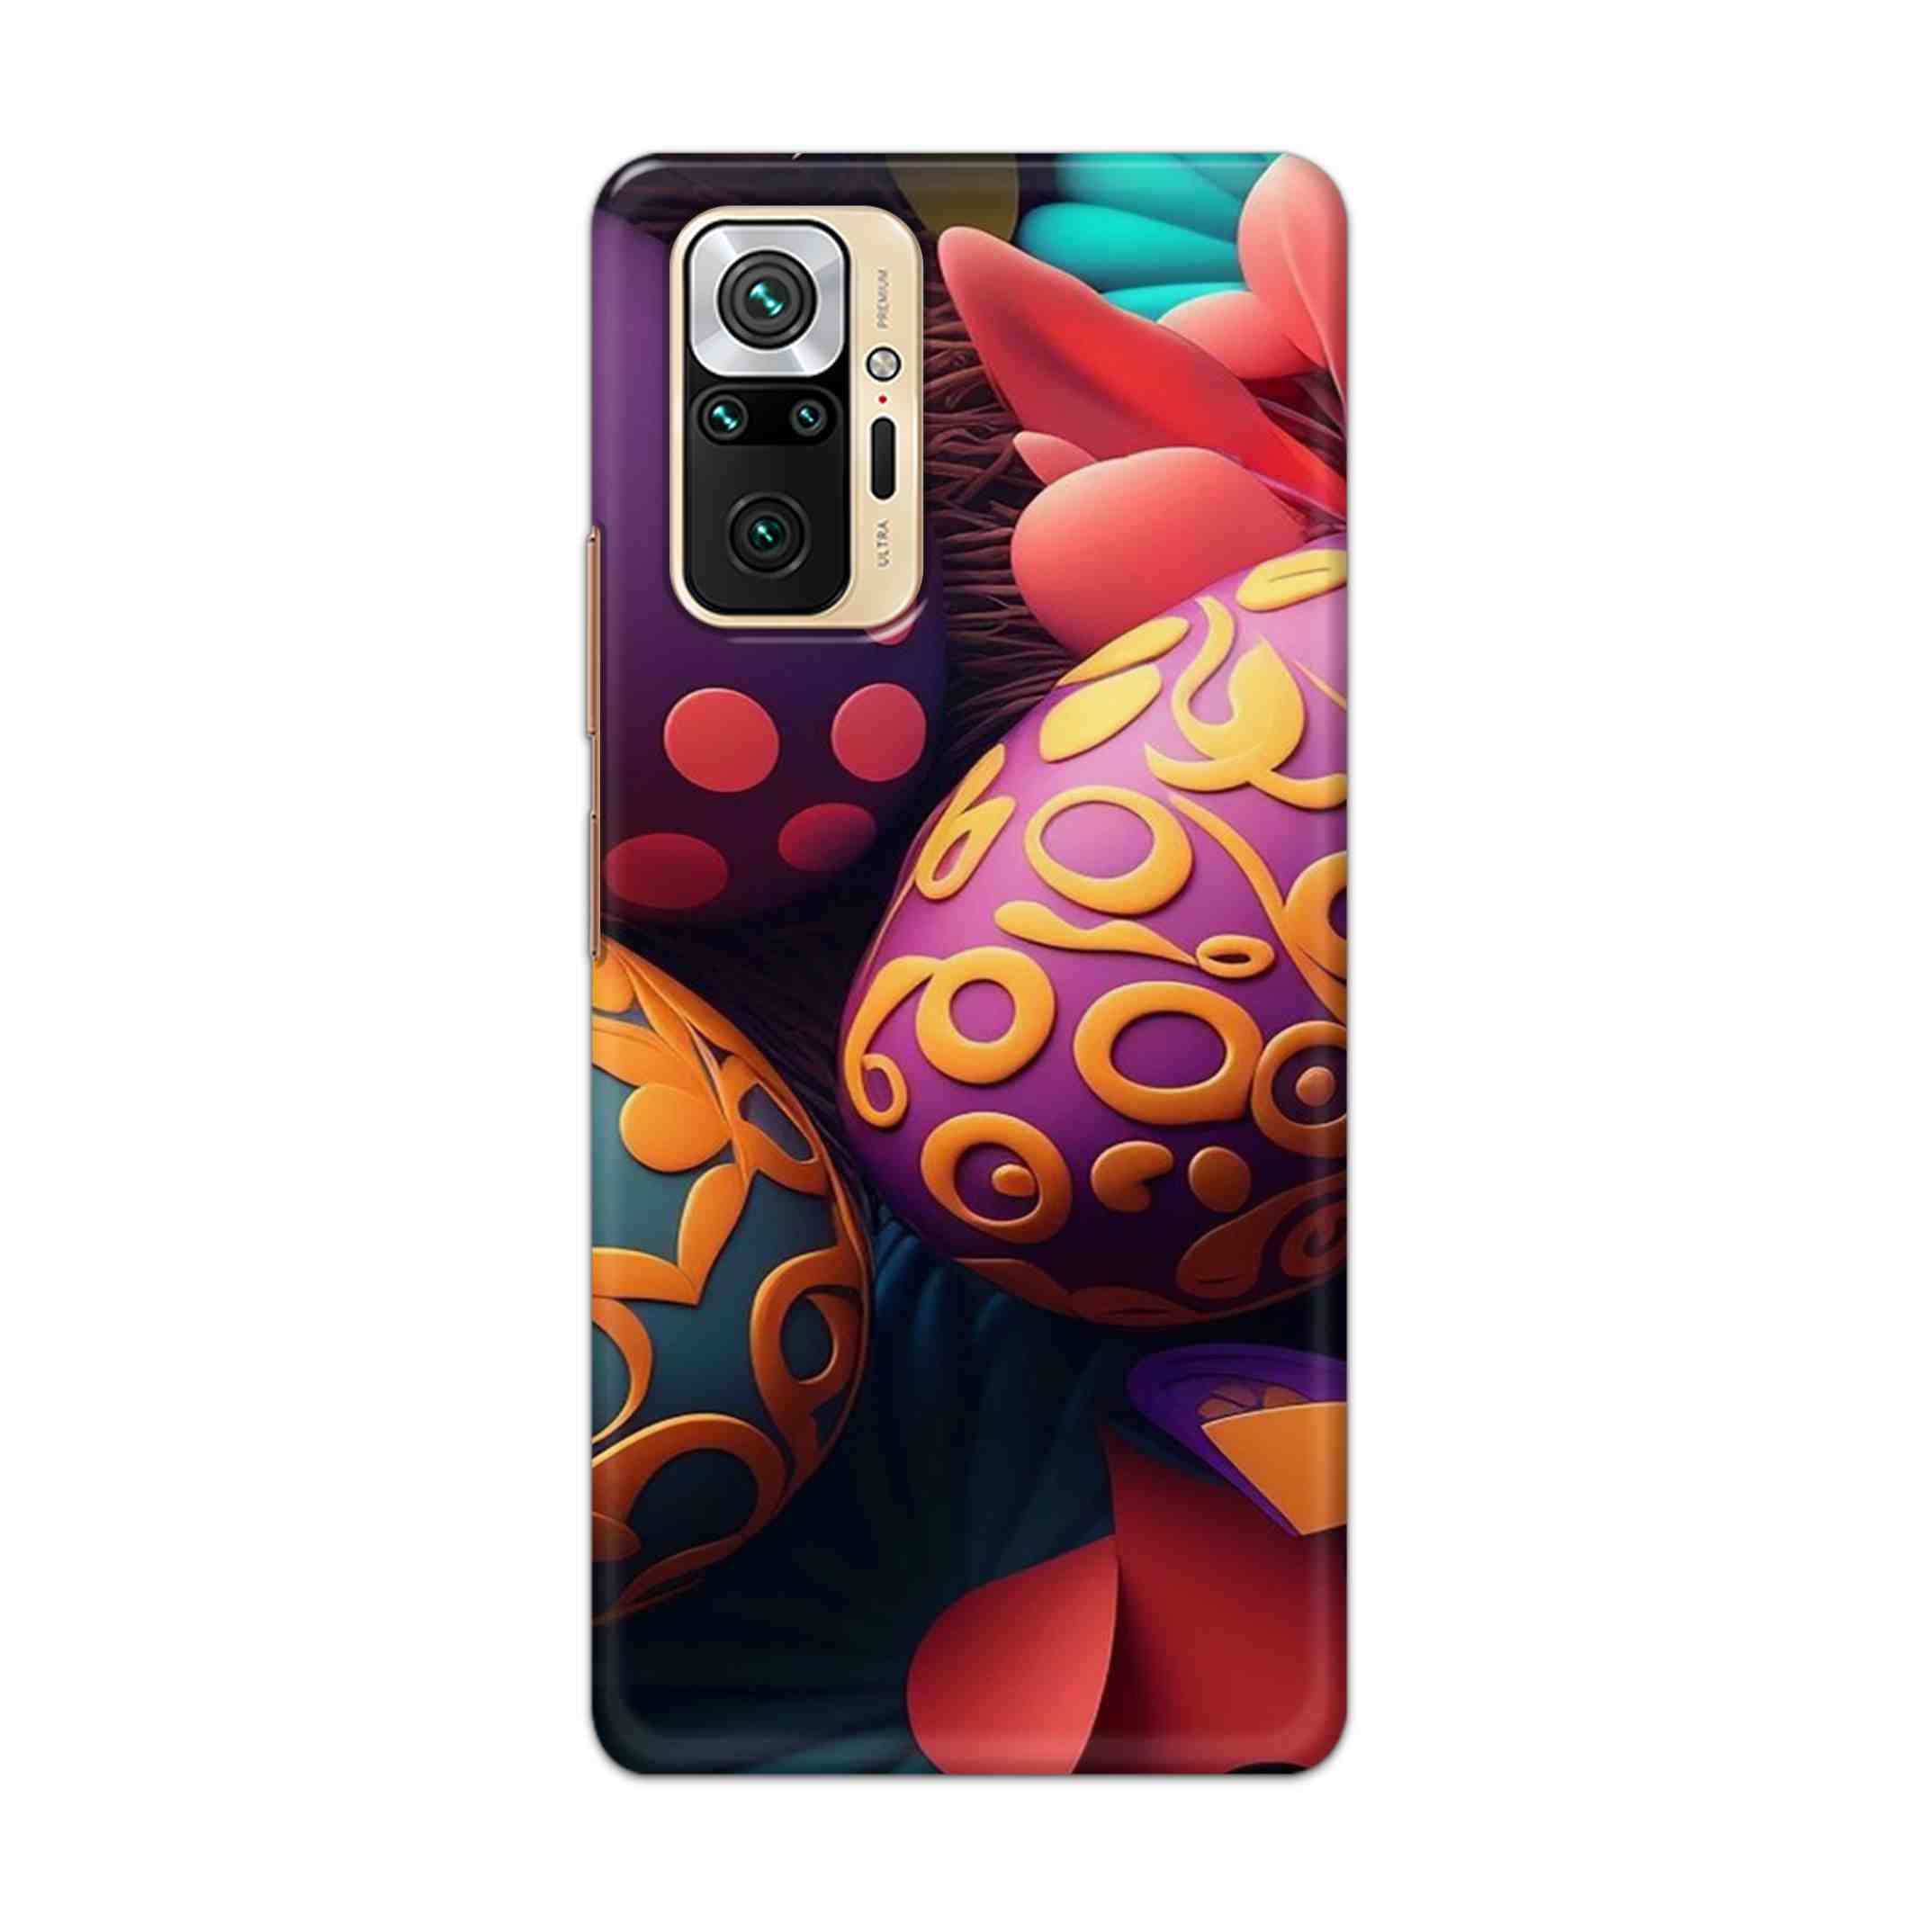 Buy Easter Egg Hard Back Mobile Phone Case Cover For Redmi Note 10 Pro Online